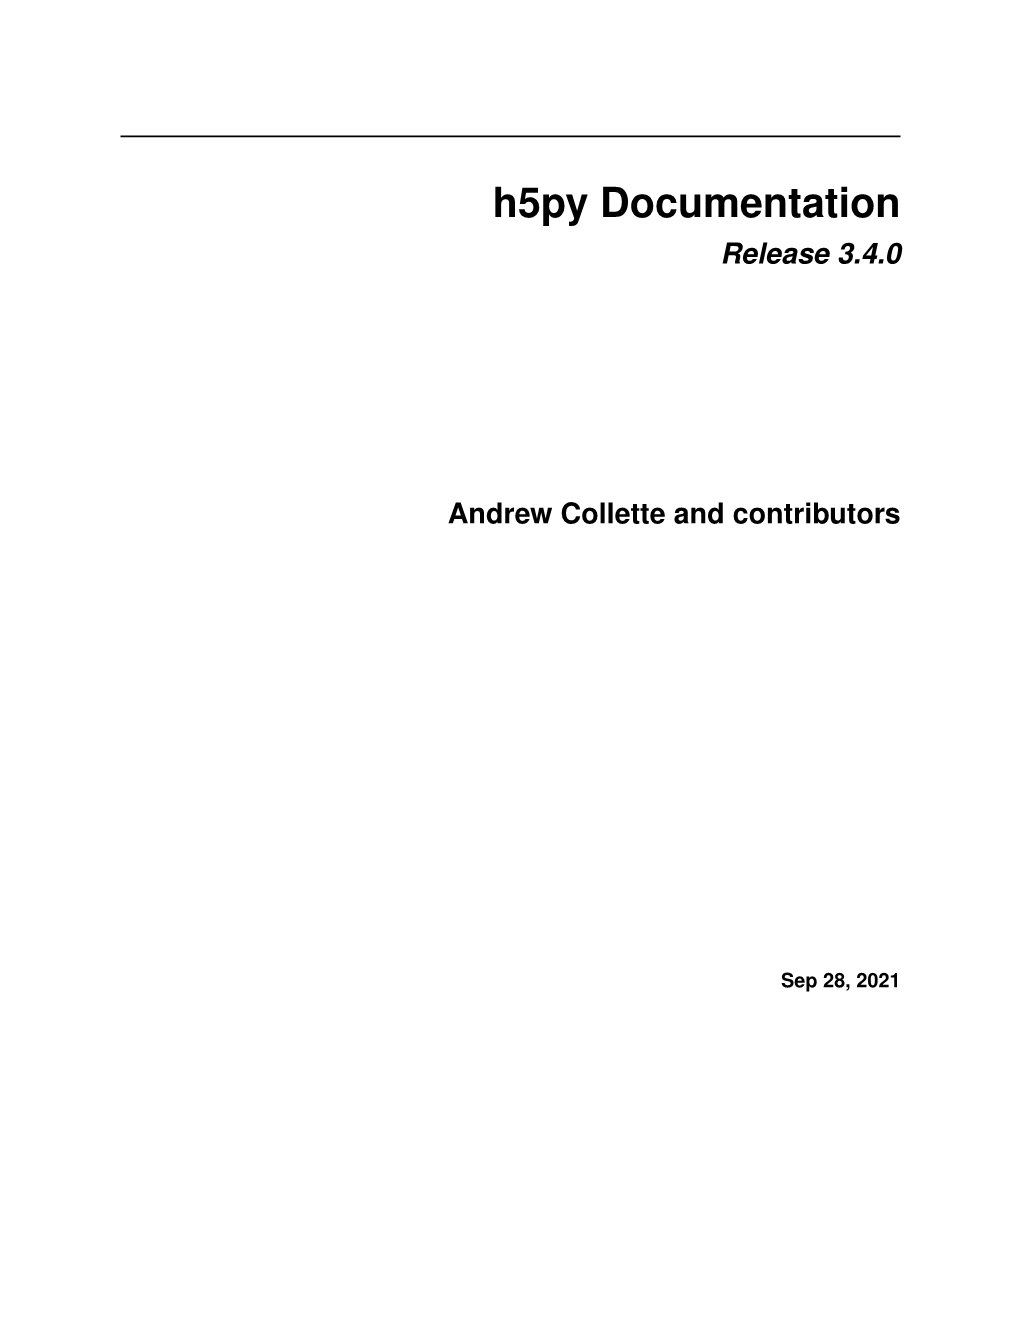 H5py Documentation Release 3.4.0